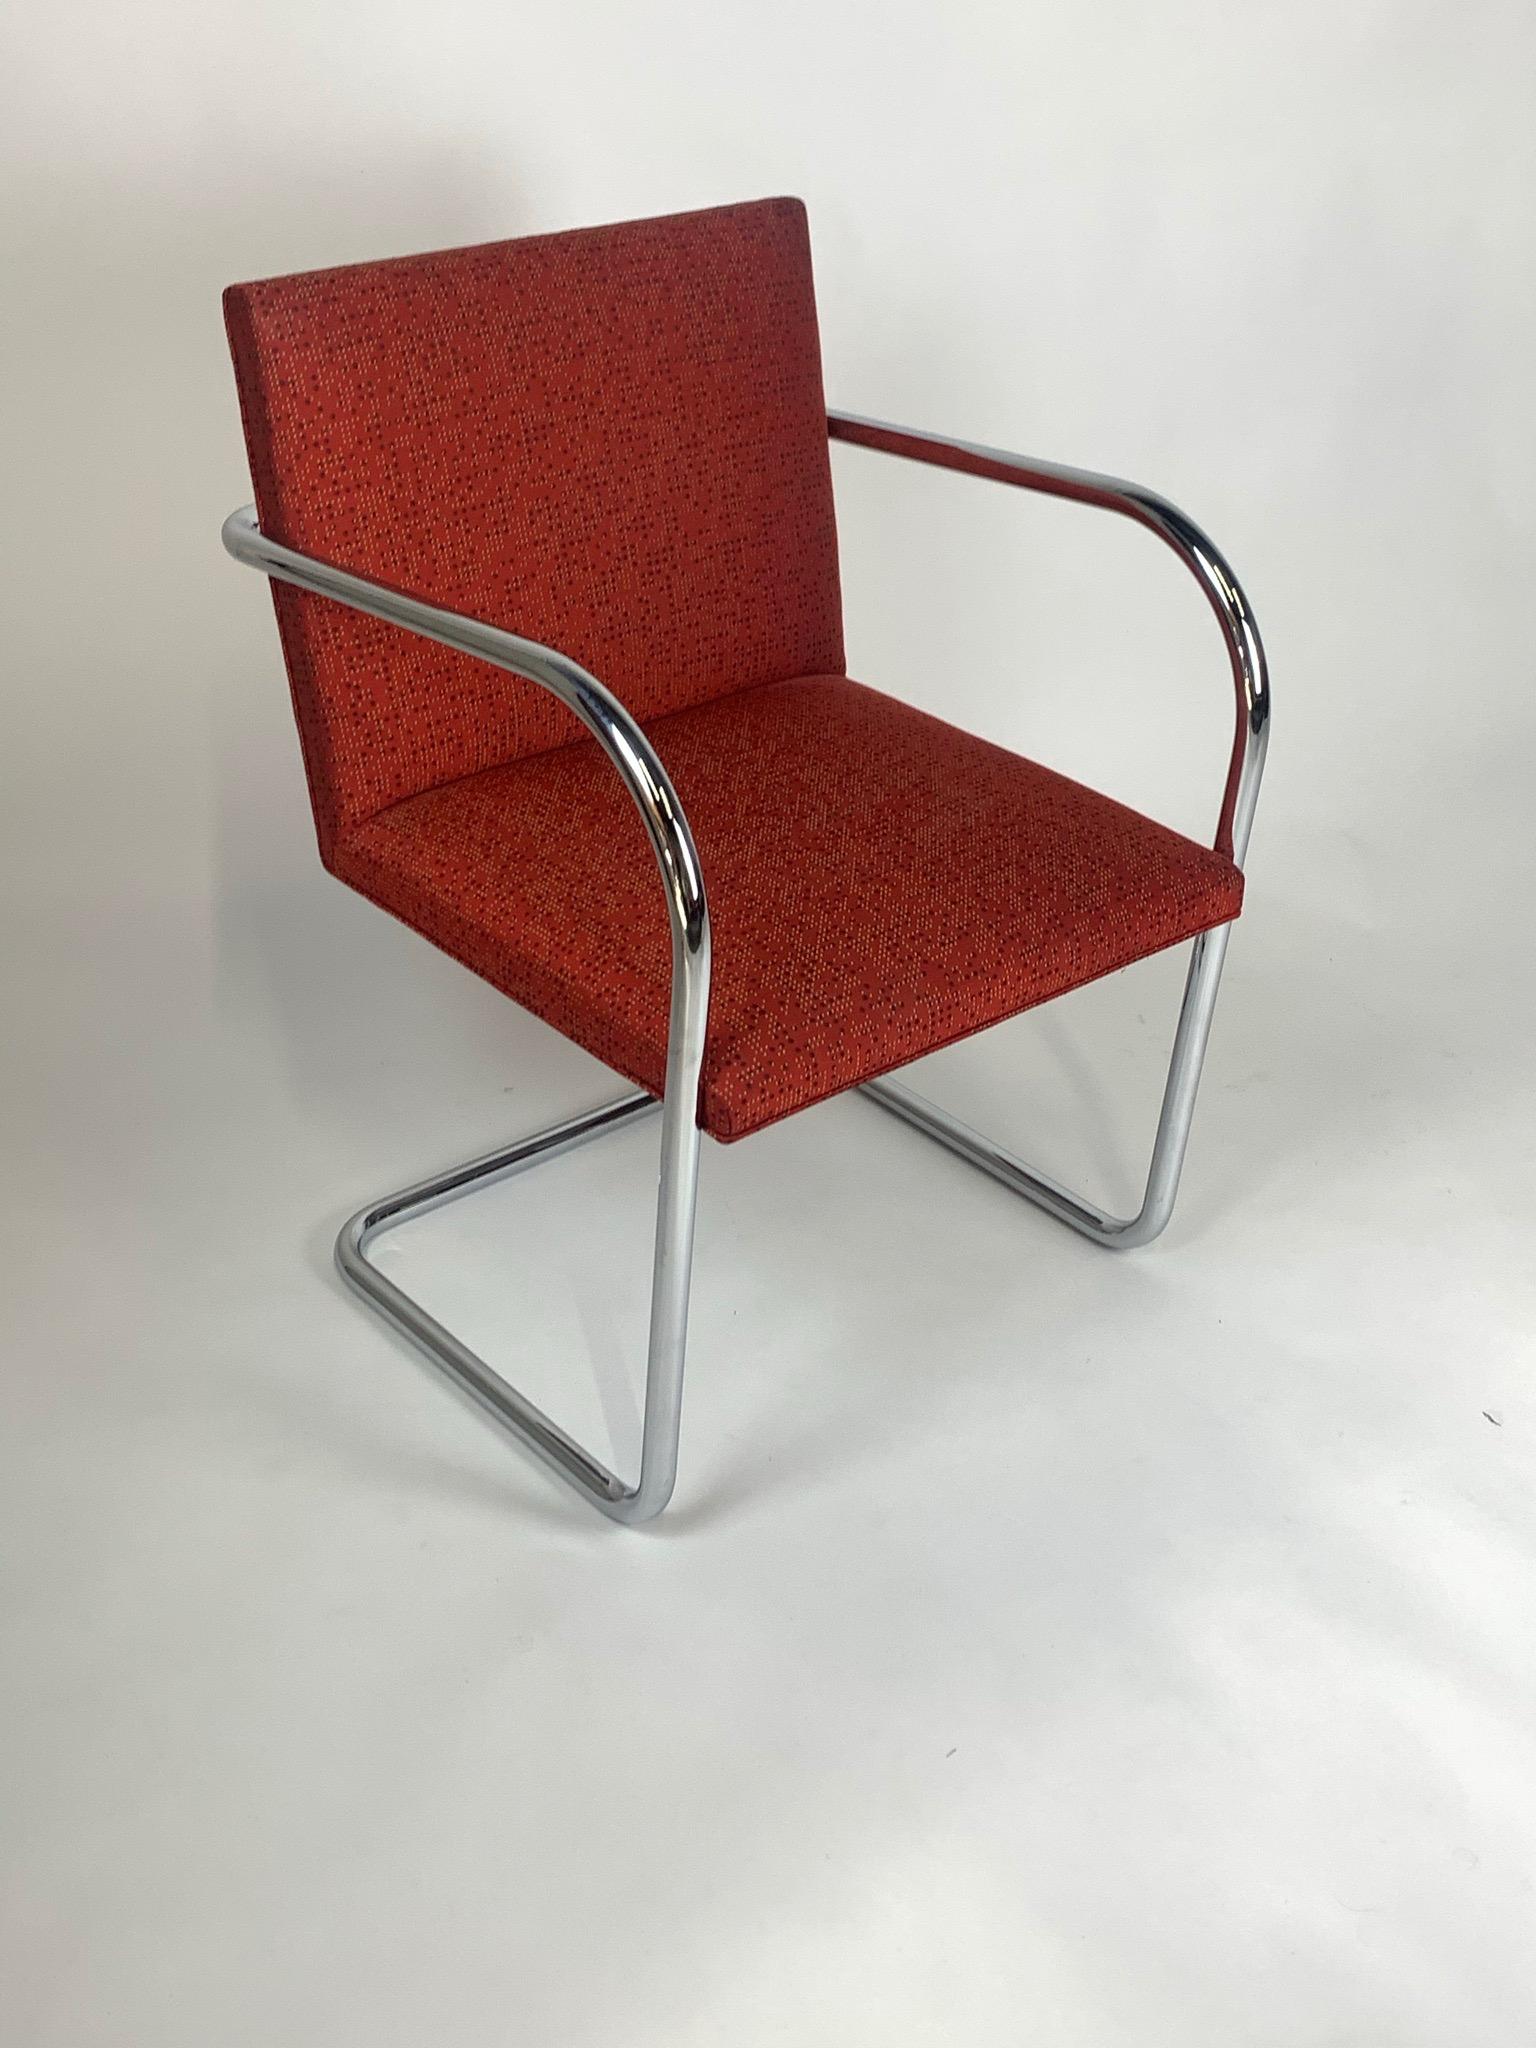 Ludwig Mies van der Rohe for Knoll Tubular Brno Chairs 12 Available 8